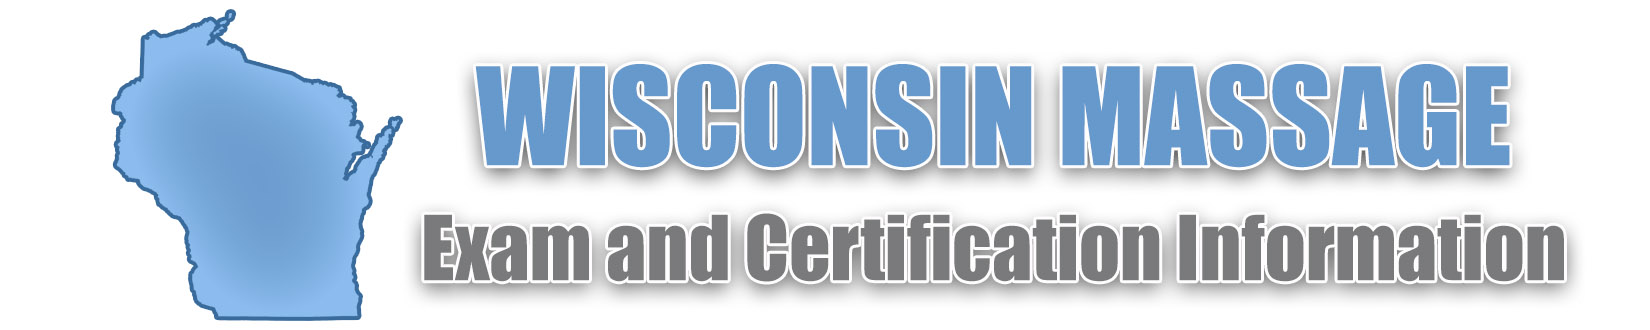 Wisconsin MBLEX Massage Exam and Certification Information